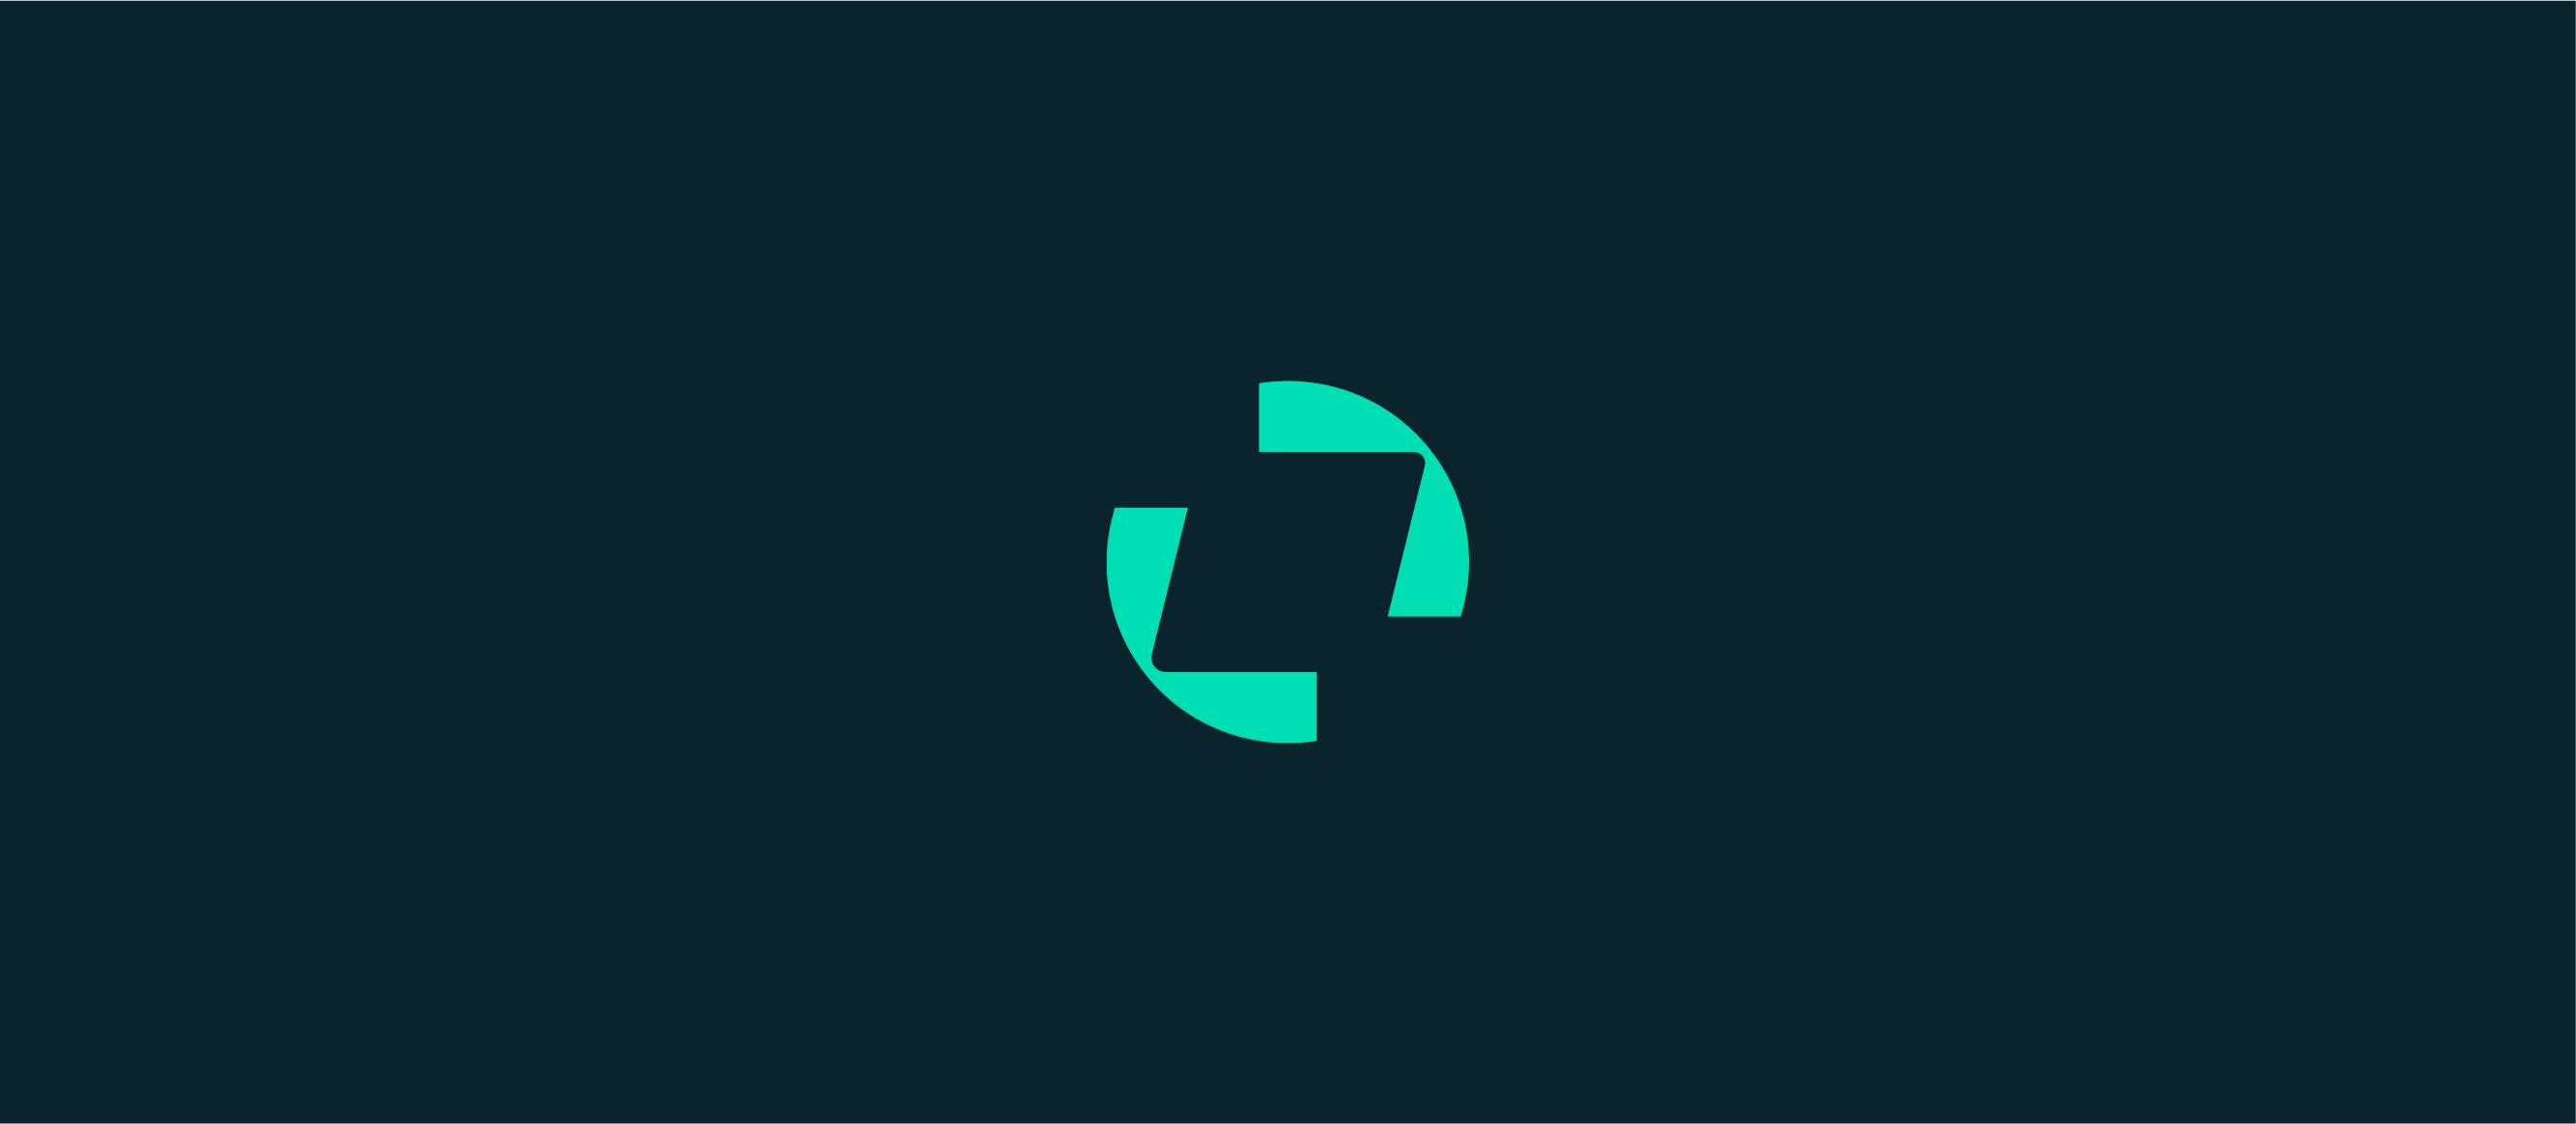 marketron-logo-identity-design-01